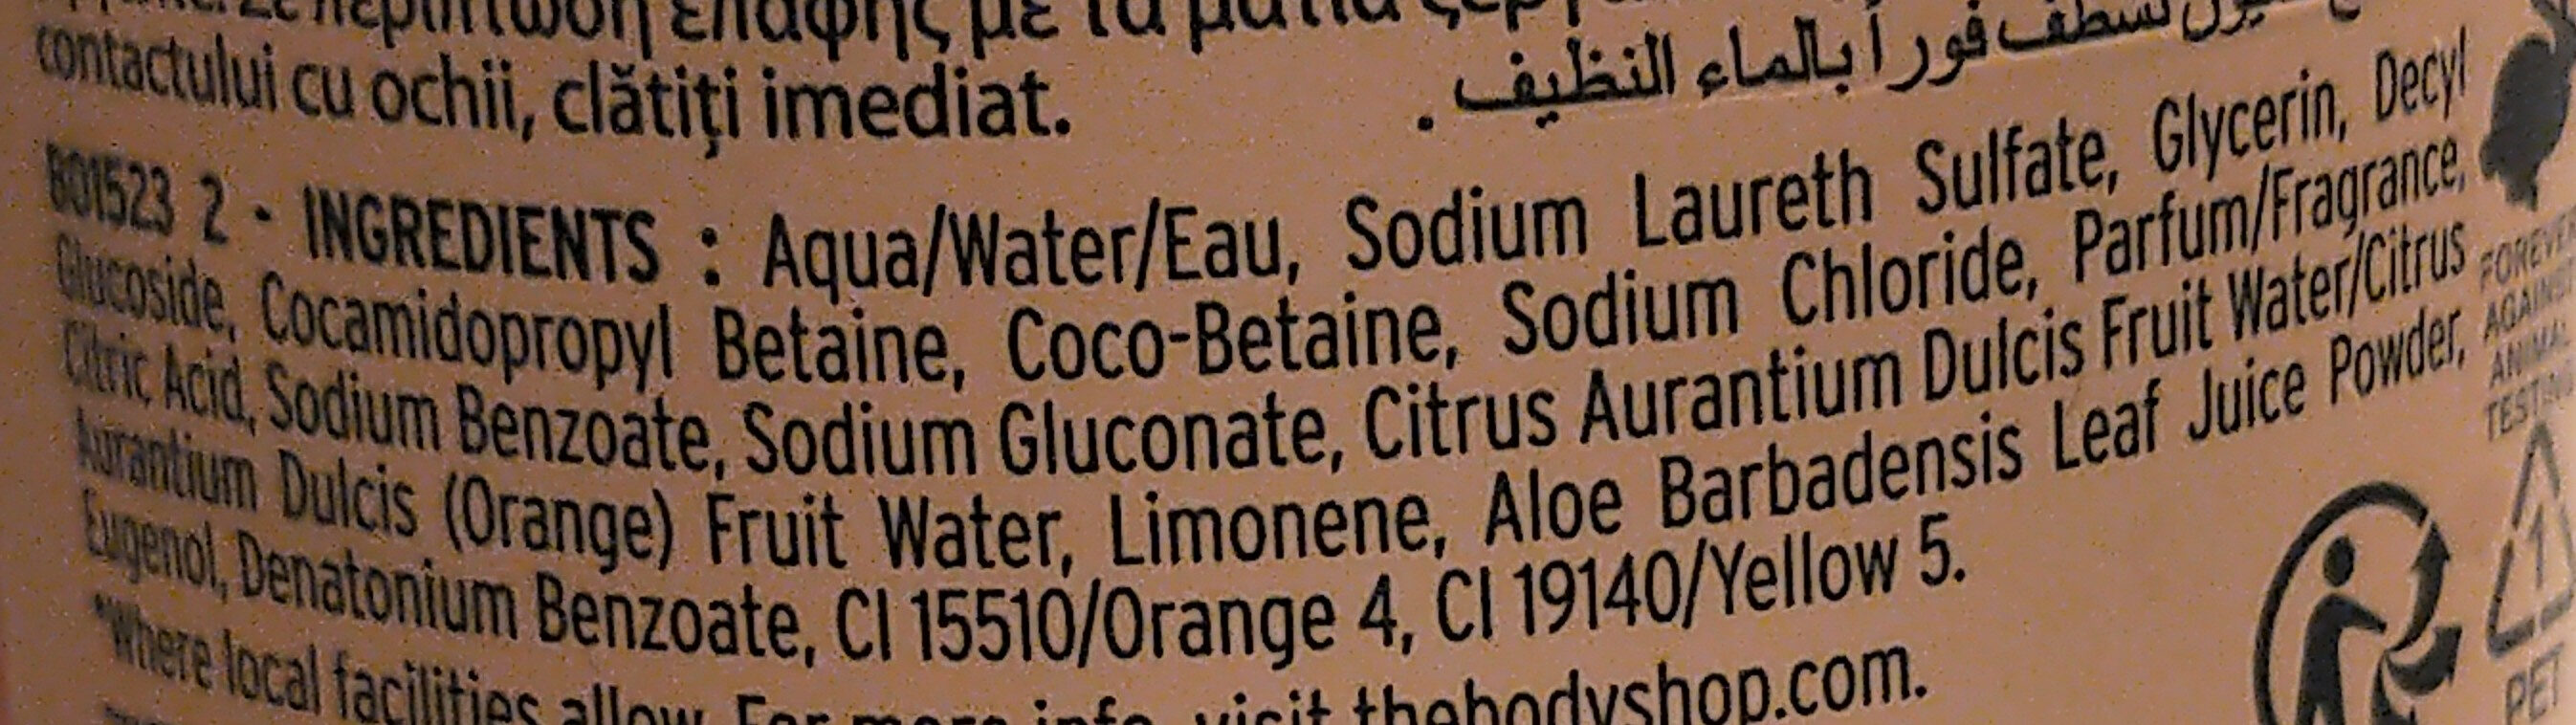 Spiced Orange Shower Gel - Ingredients - en